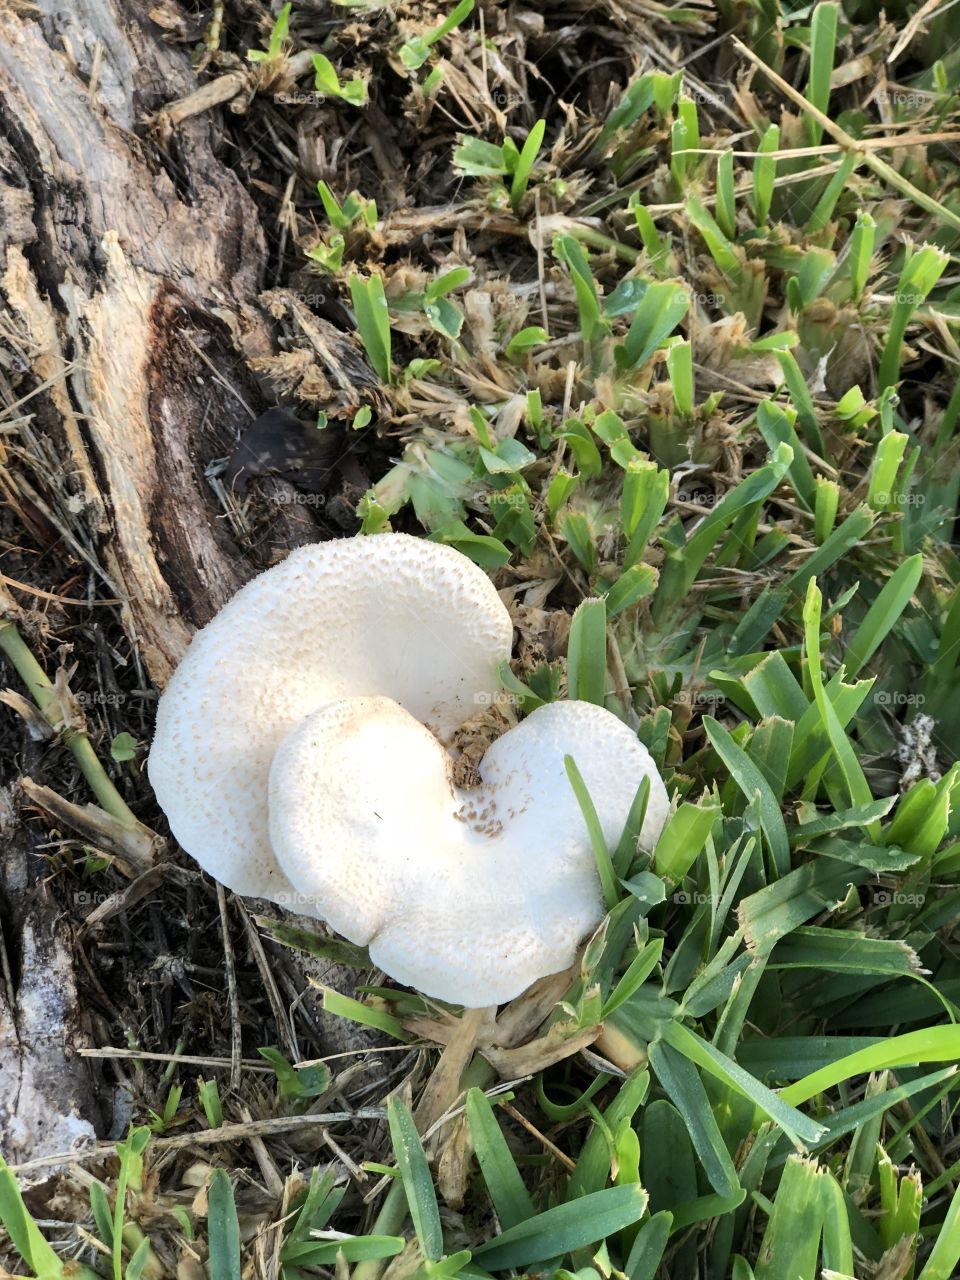 White mushrooms in the park